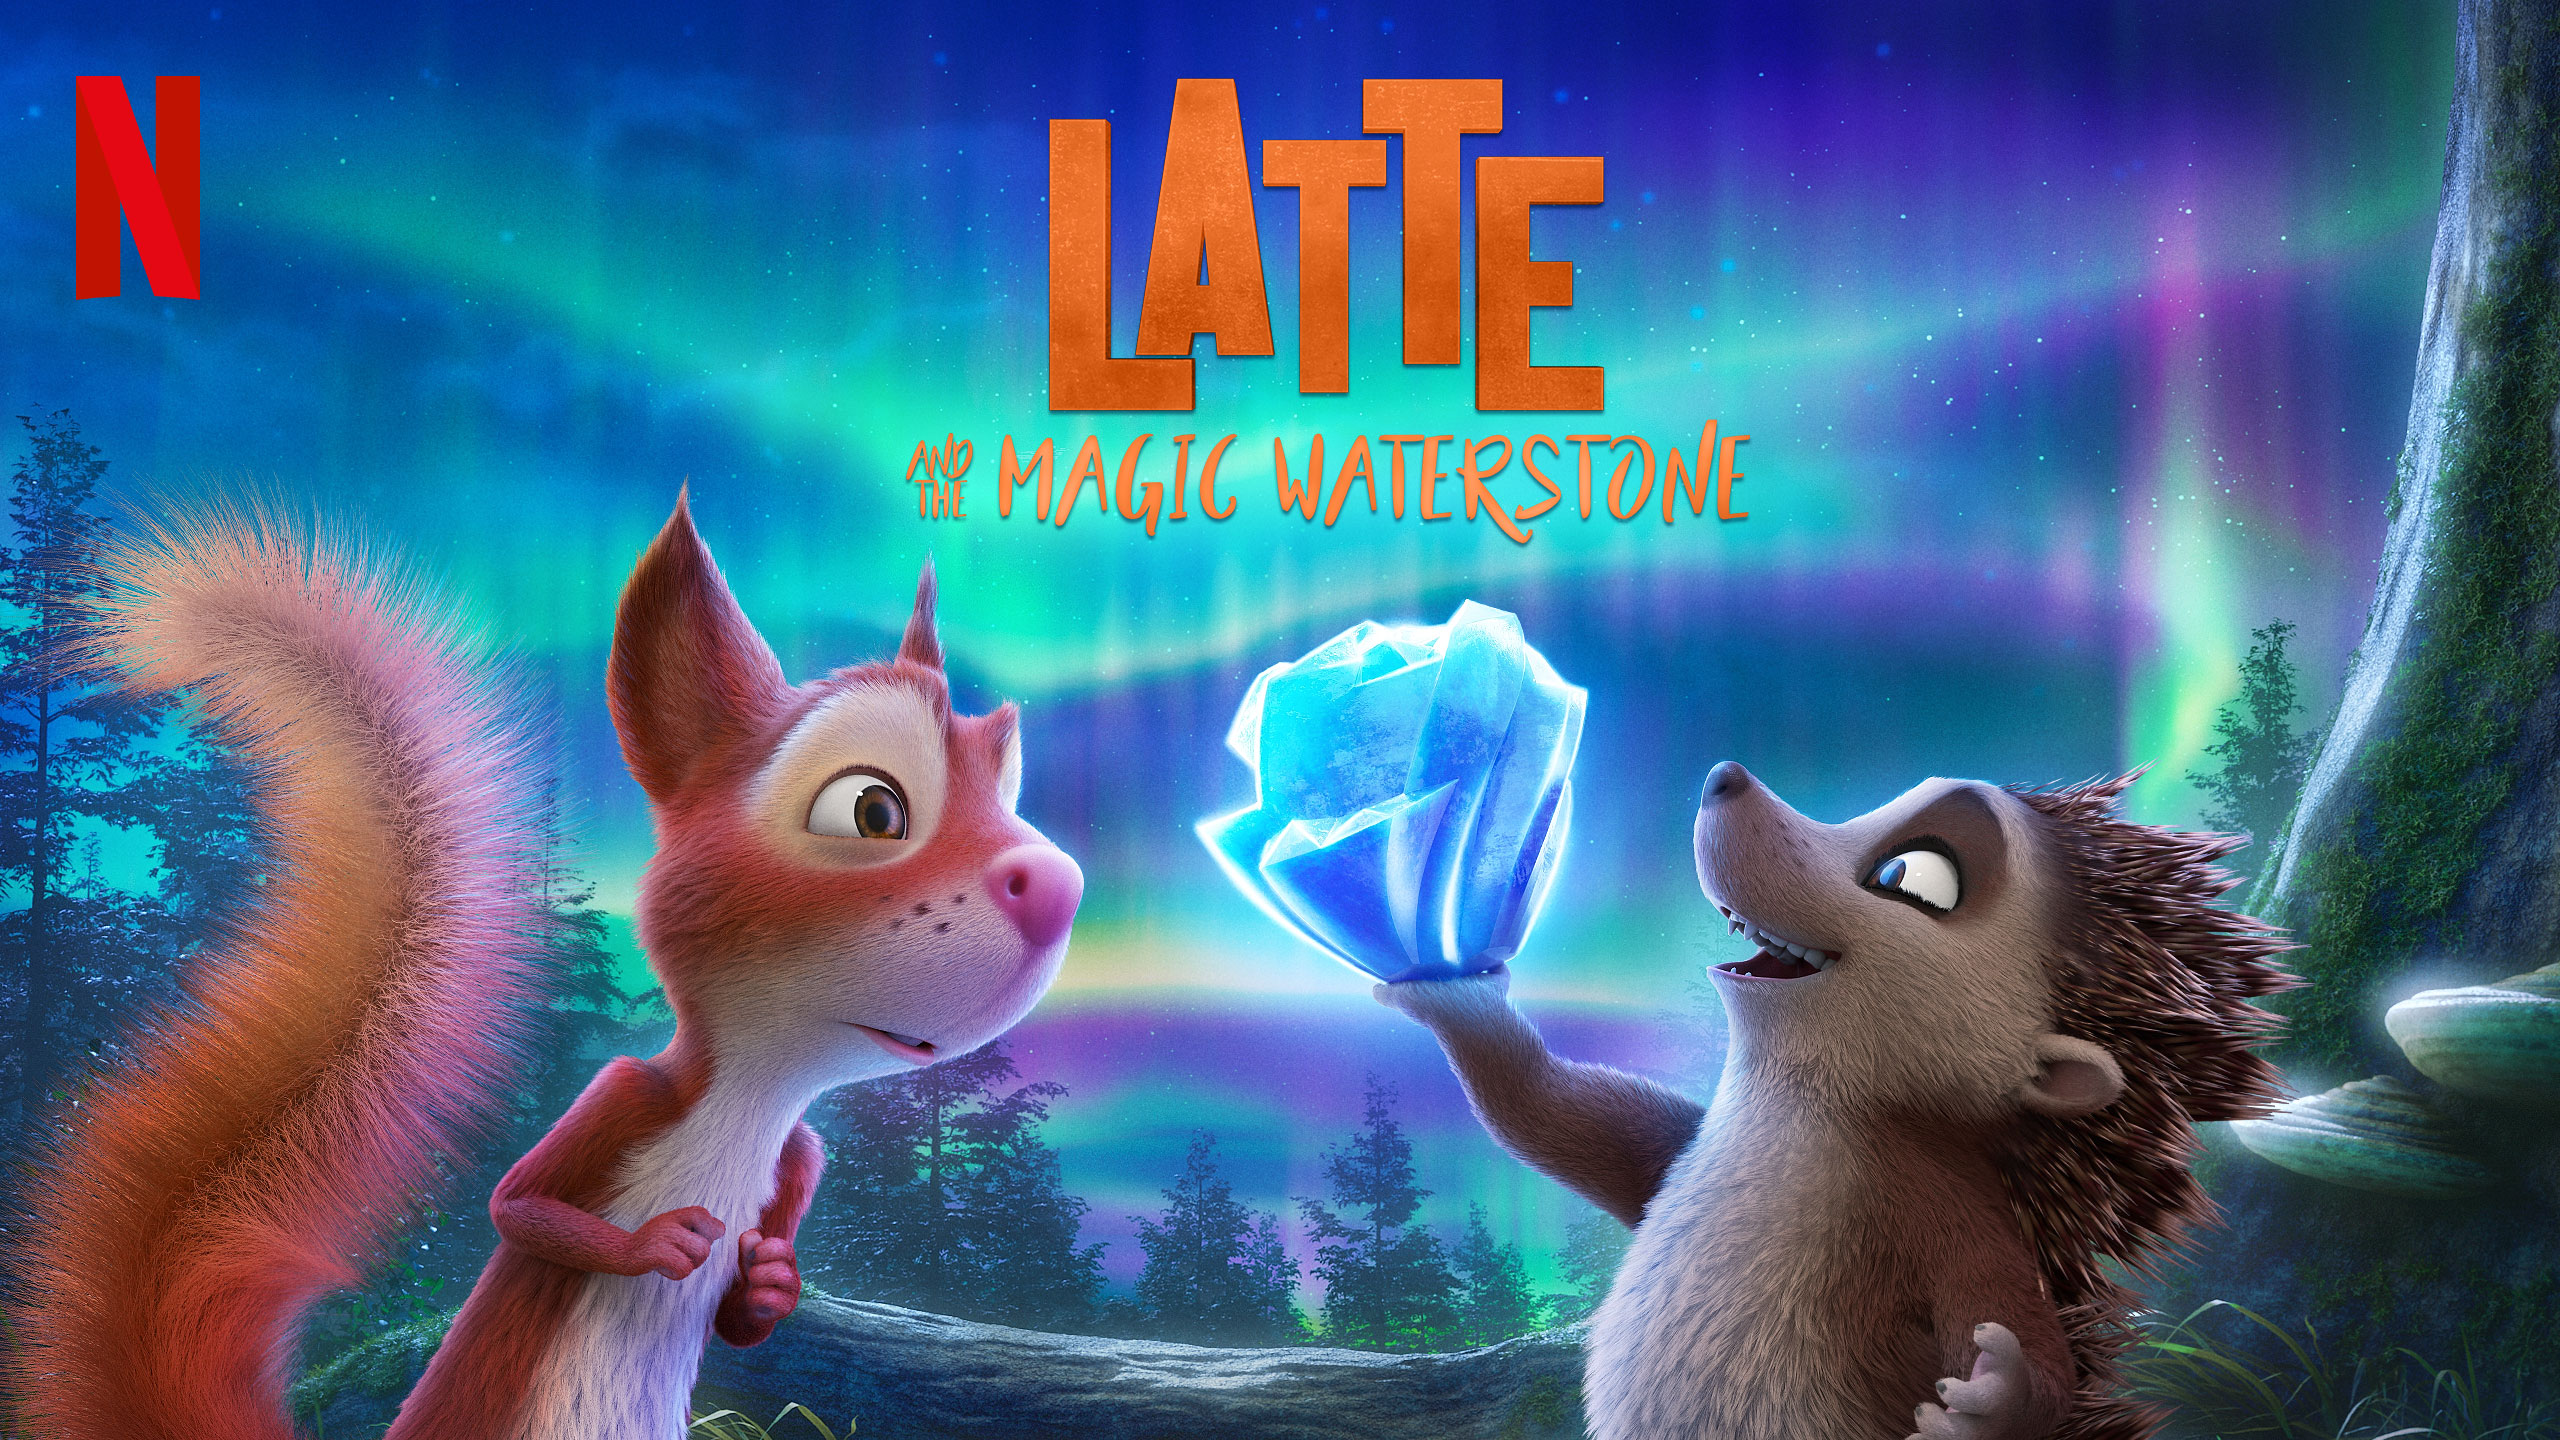 Latte and the Magic Waterstone | Netflix HDA Concept, Finishing & Illustration